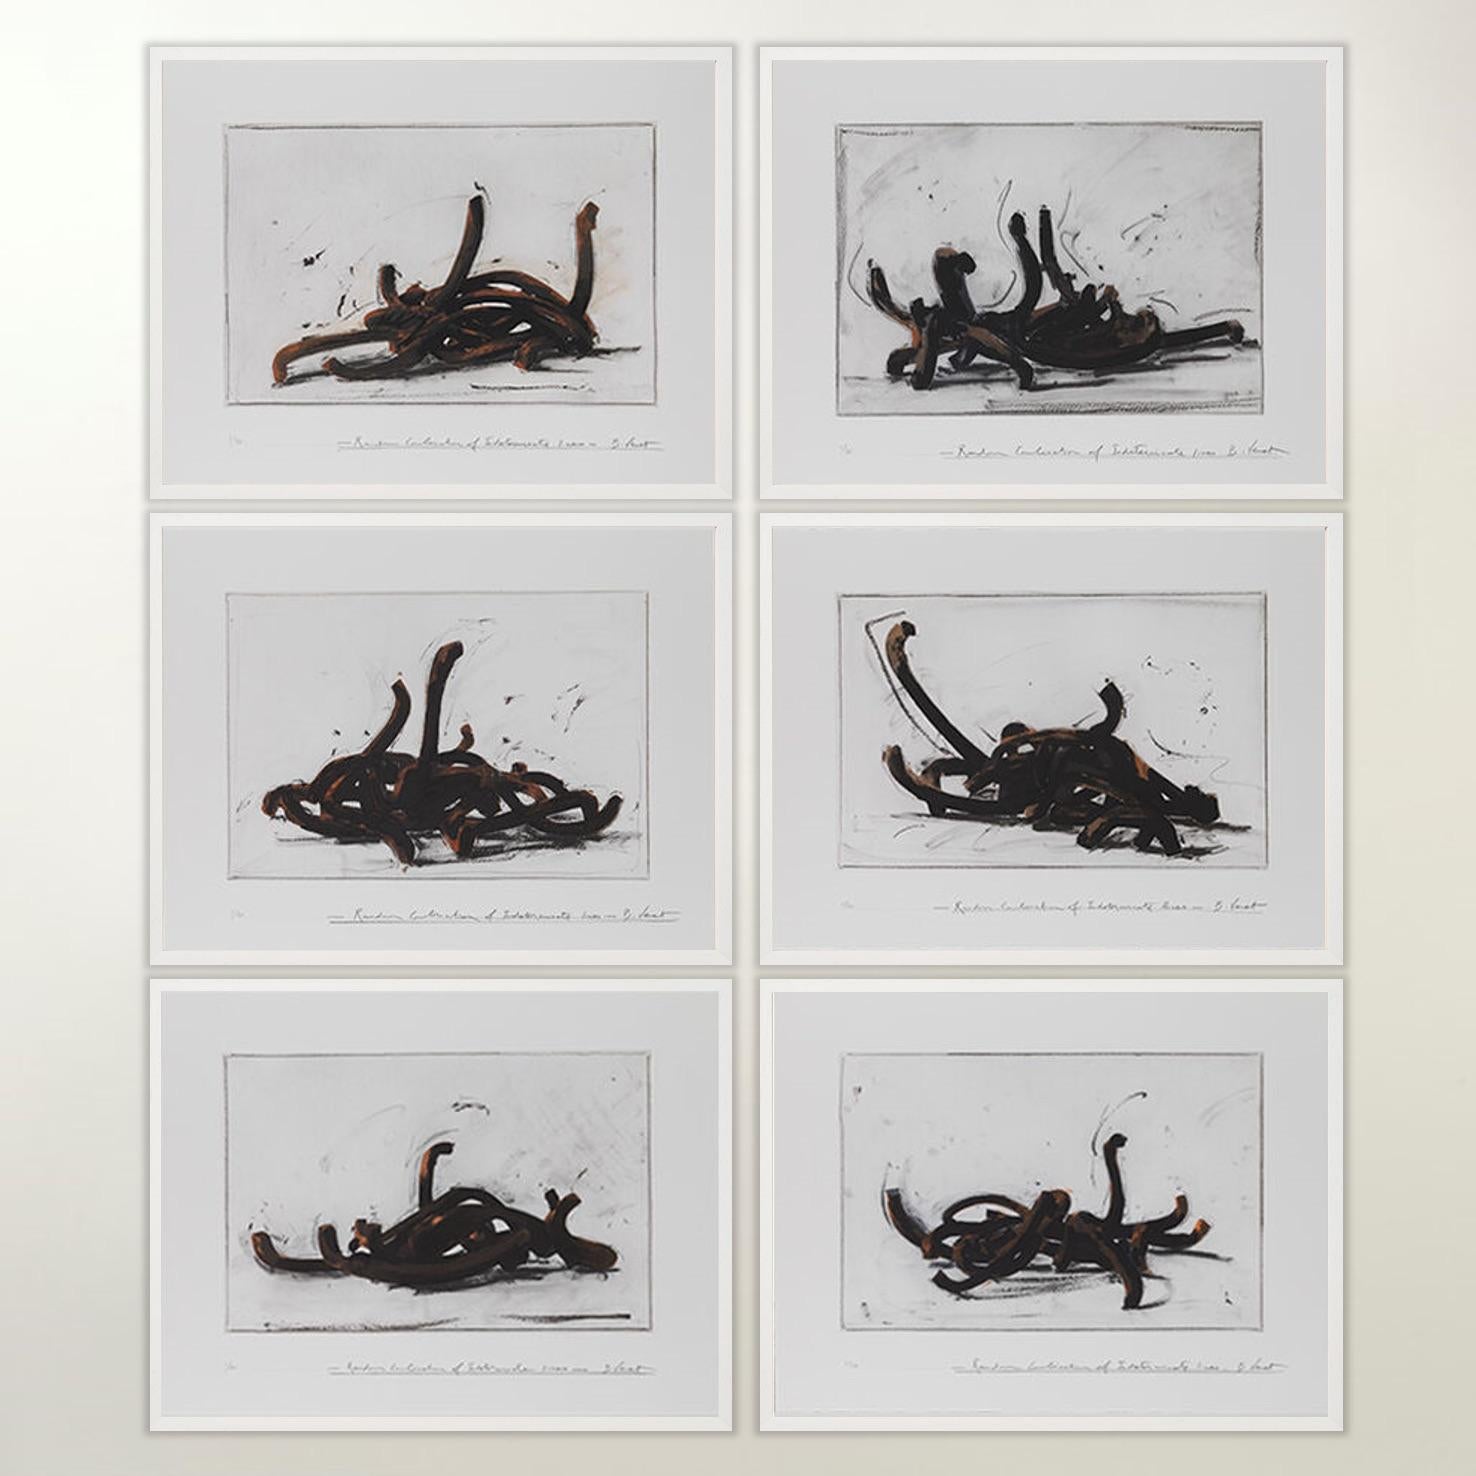 Bernar Venet Figurative Print - Random Combination of Indeterminate Lines - Contemporary, 21st Century, Etching